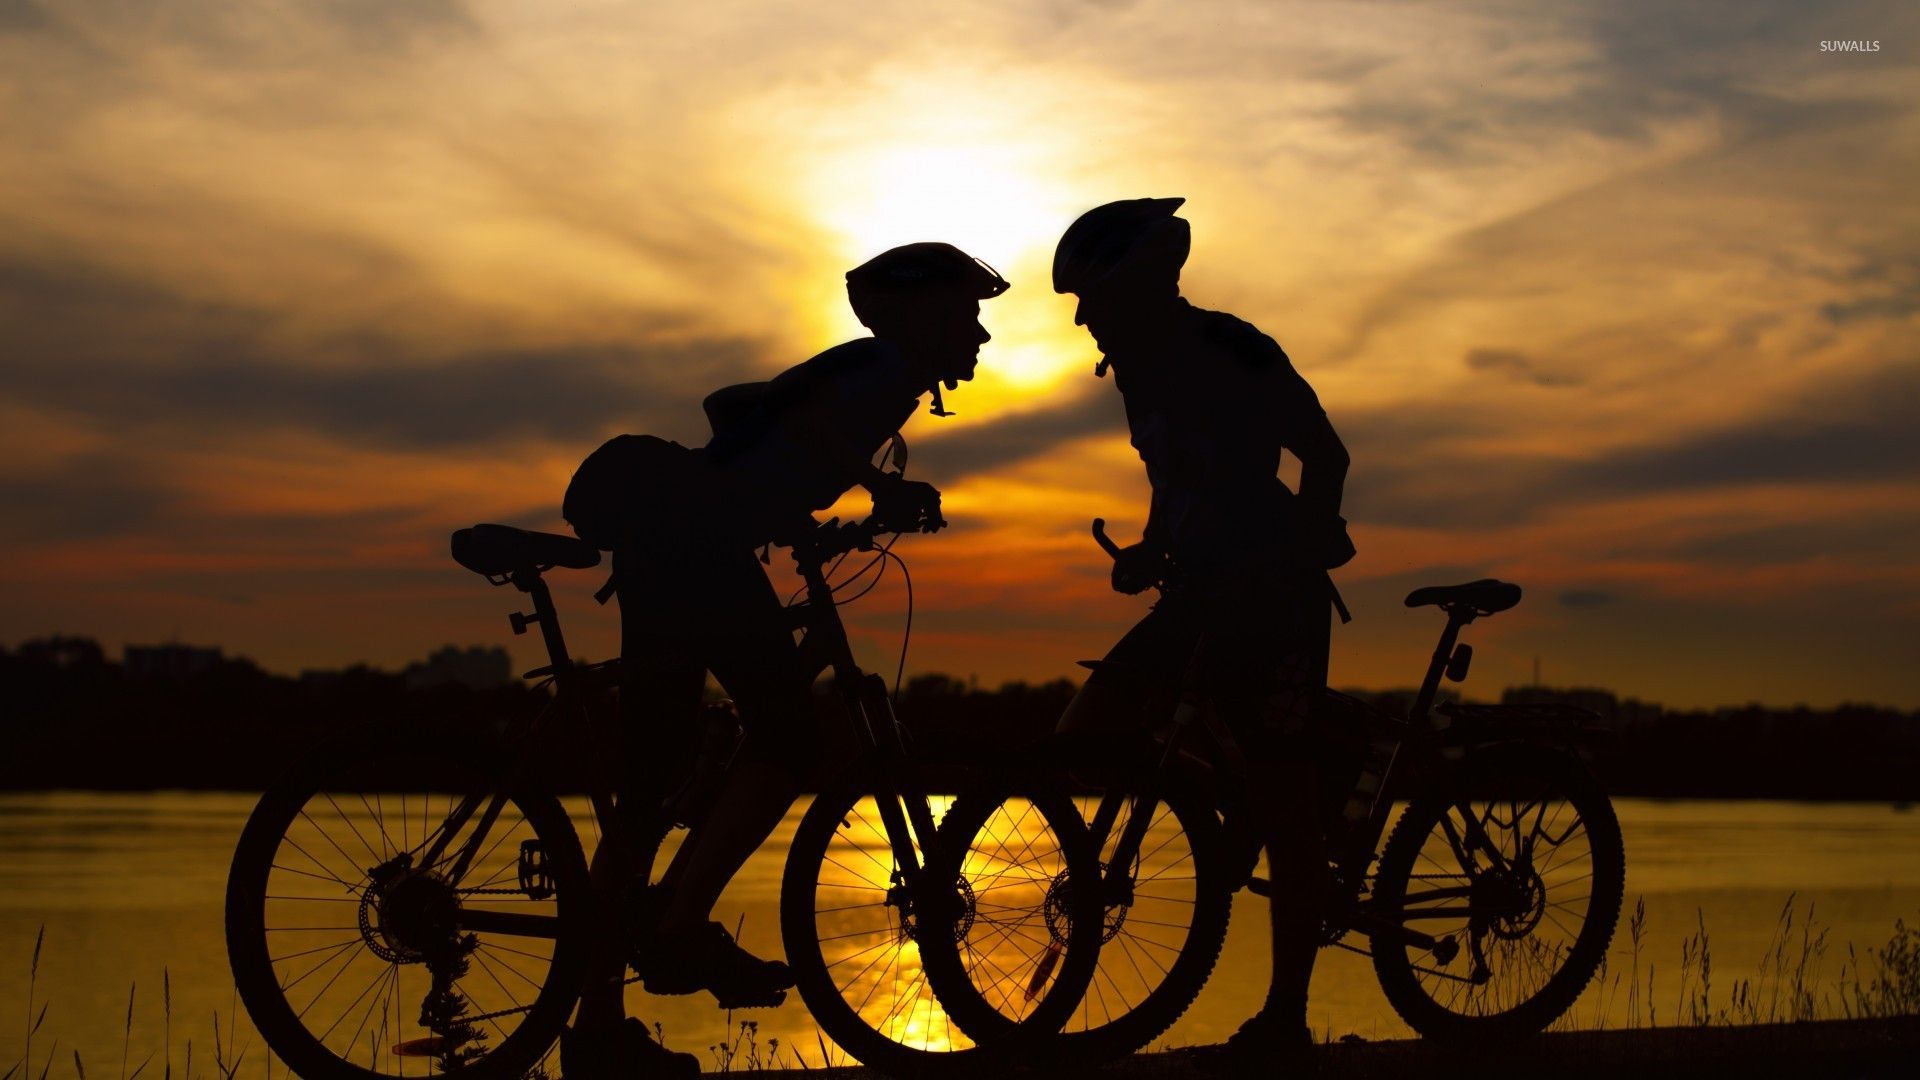 Couple on bikes at sunset wallpaper wallpaper